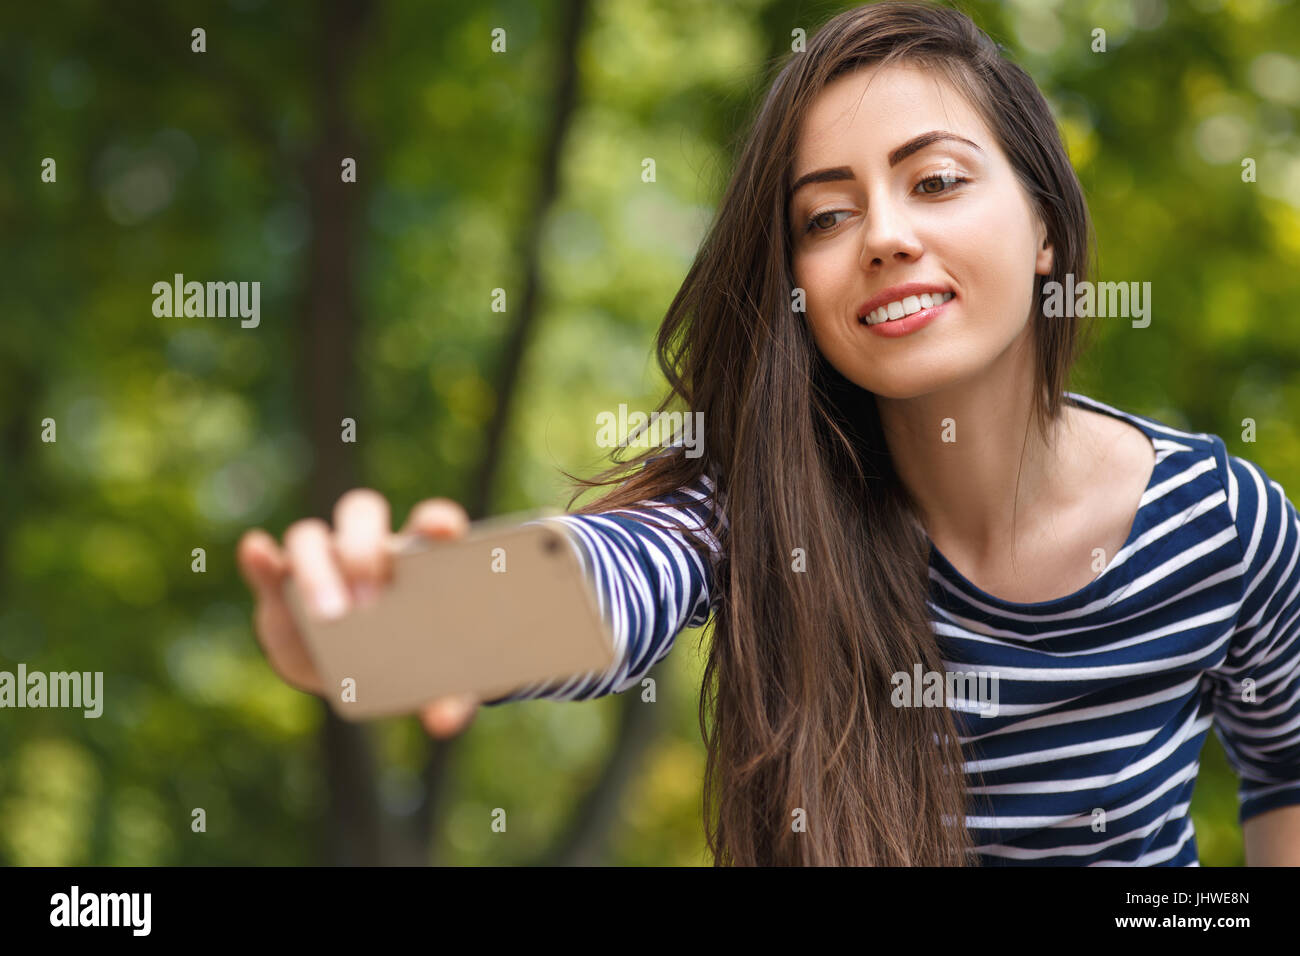 girl making selfie portrait Stock Photo